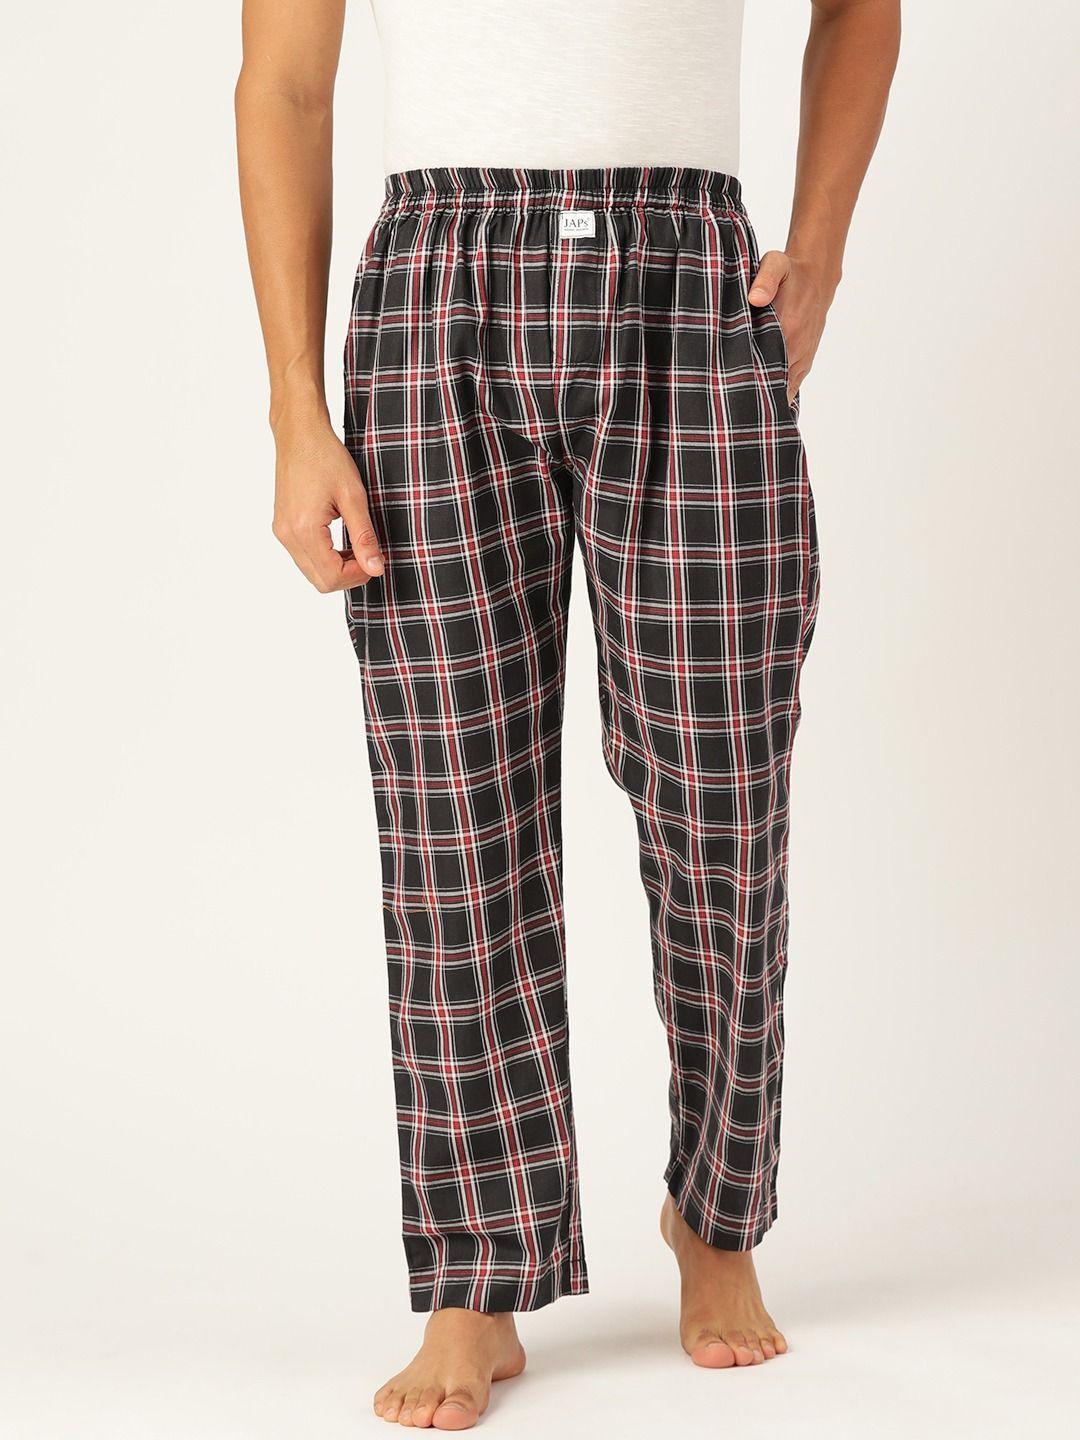 Jockey Lingerie : Jockey Peach Blossom Assorted Prints Knit Lounge Pants -  Style Number - RX09 Online| Nykaa Fashion